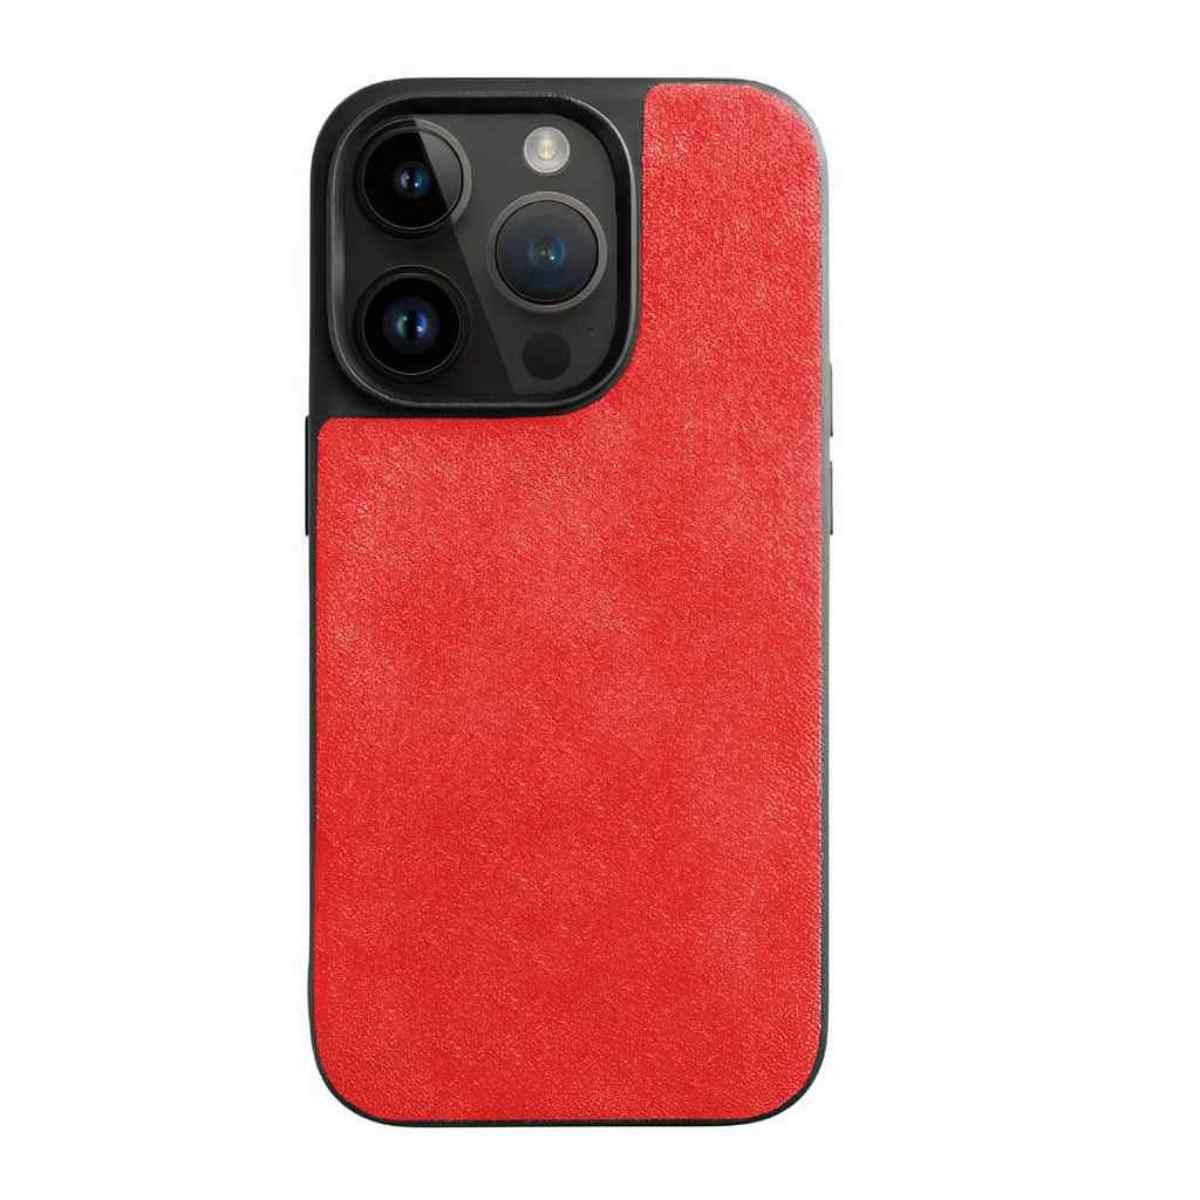  Red Alcantara 14 Pro iPhone Case by Gentcreate